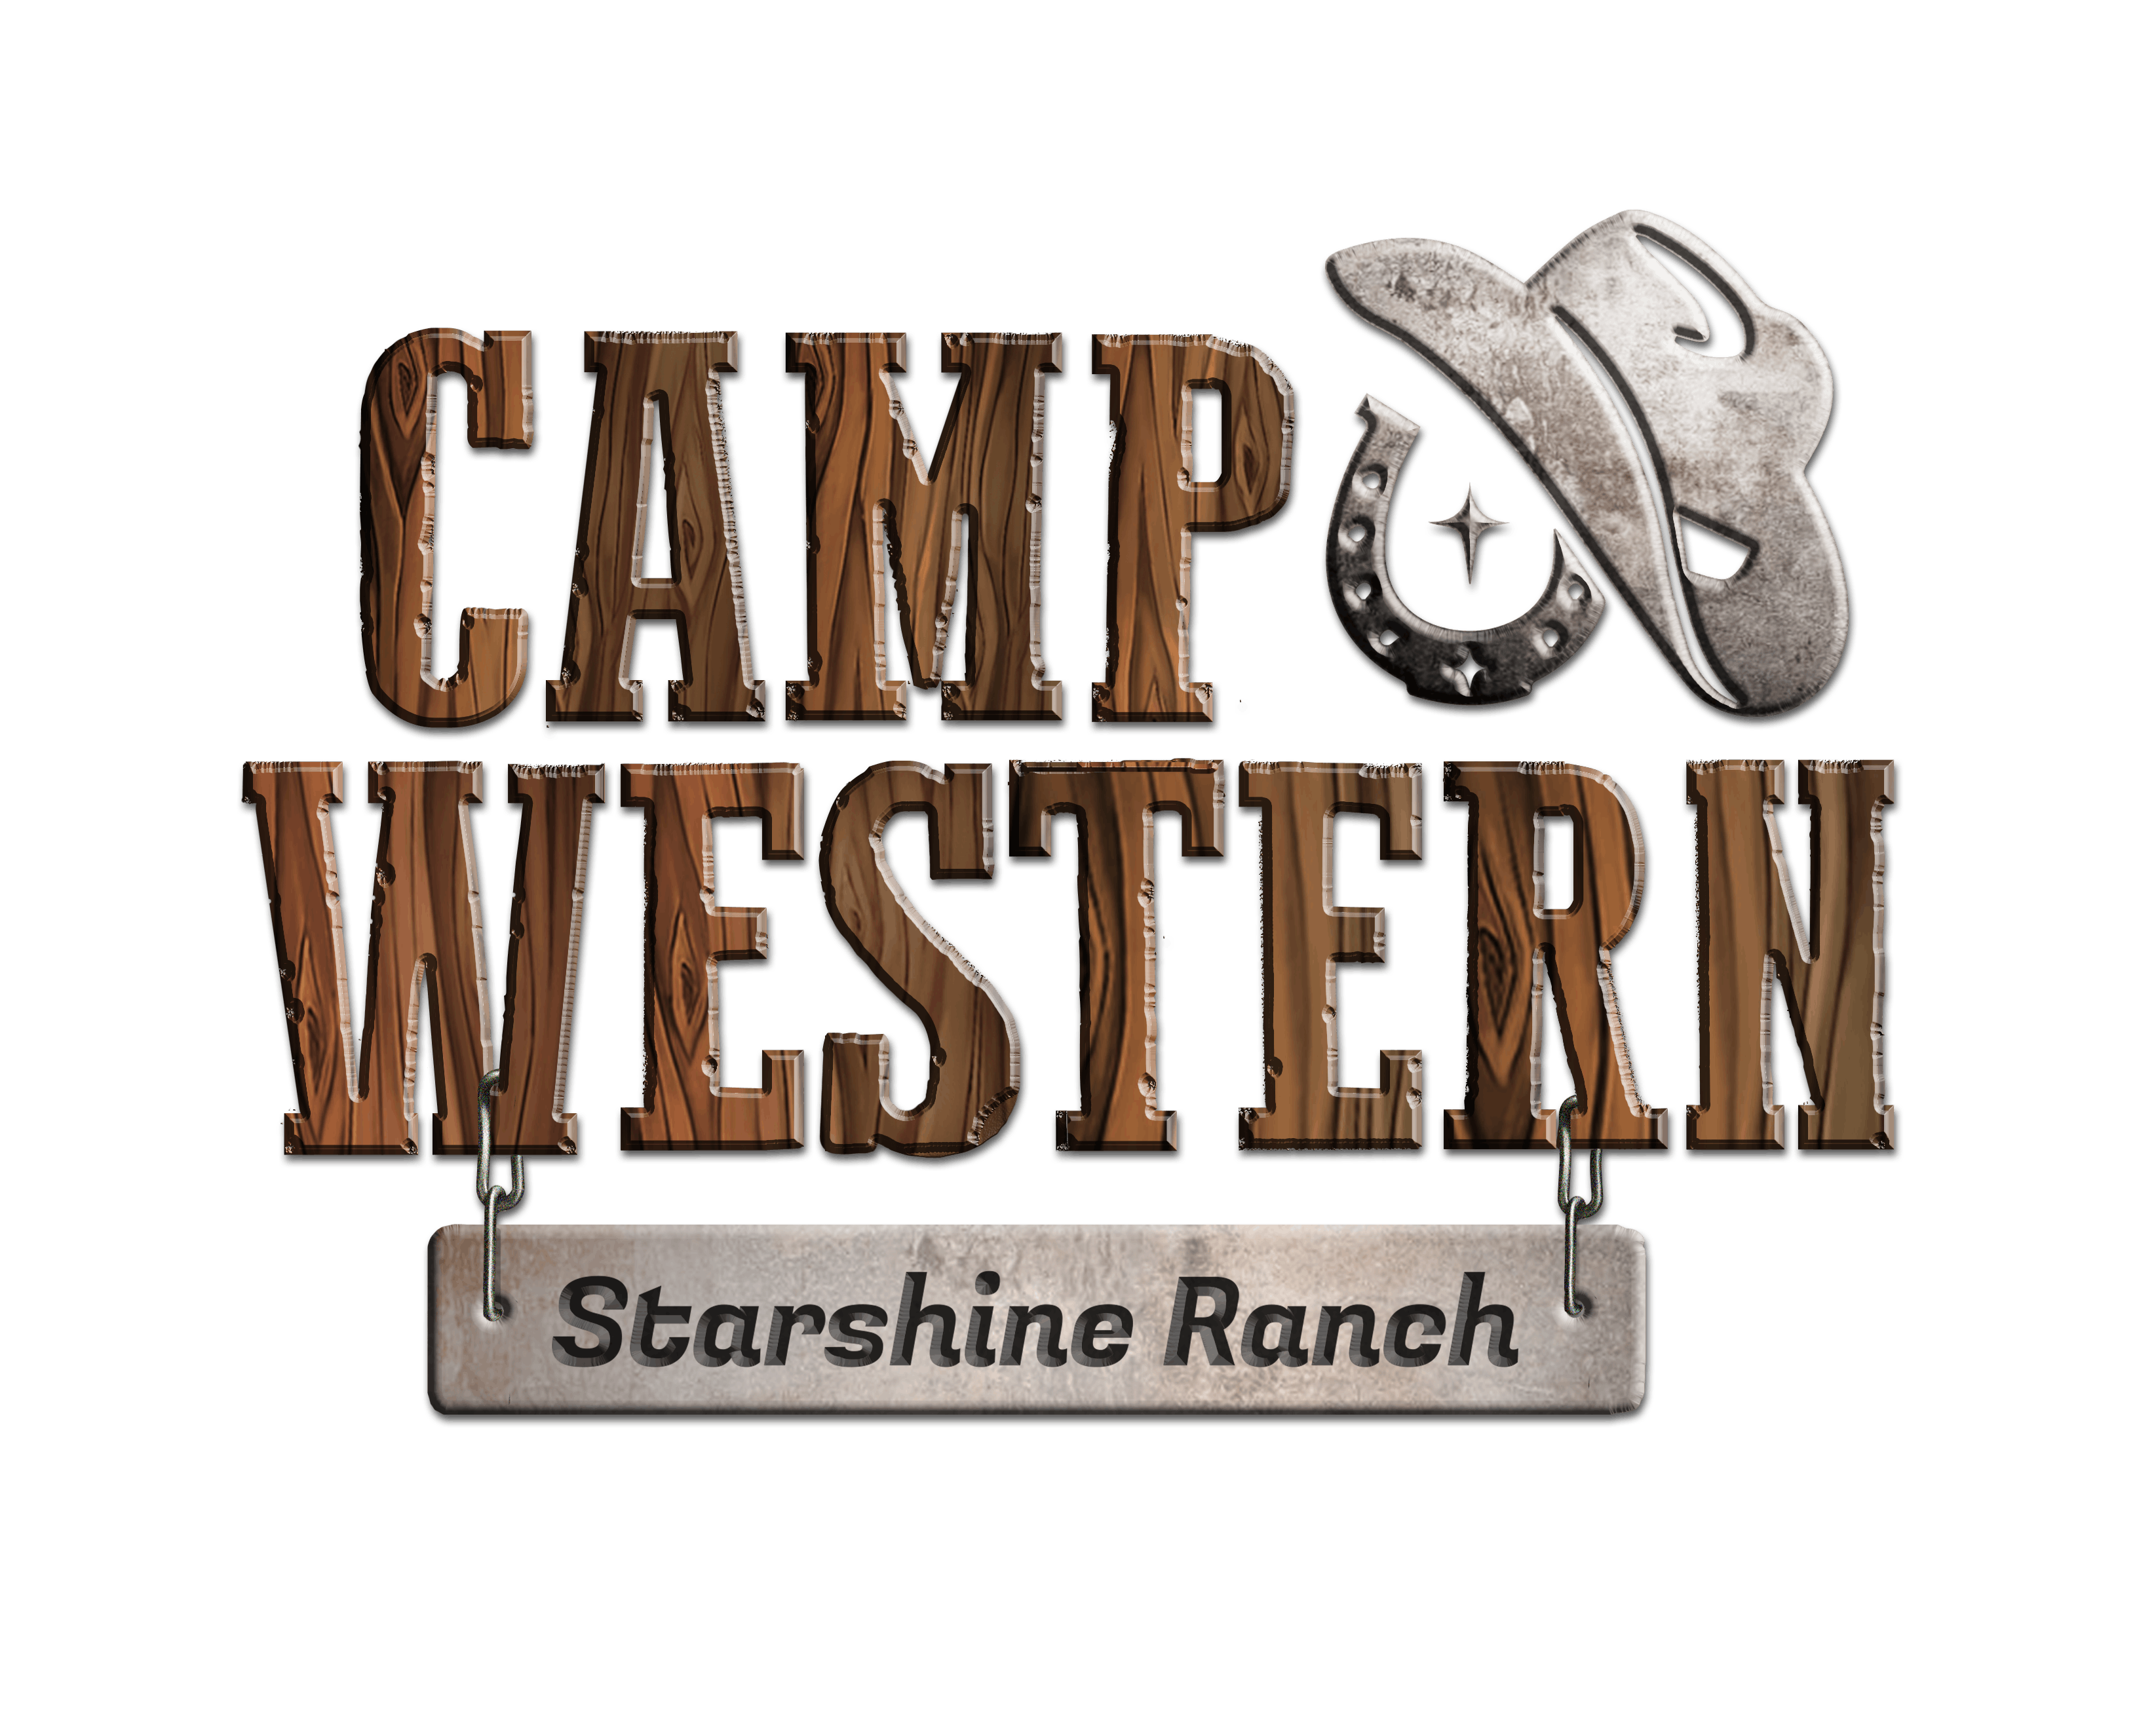 Camp Western – Summer event 2023